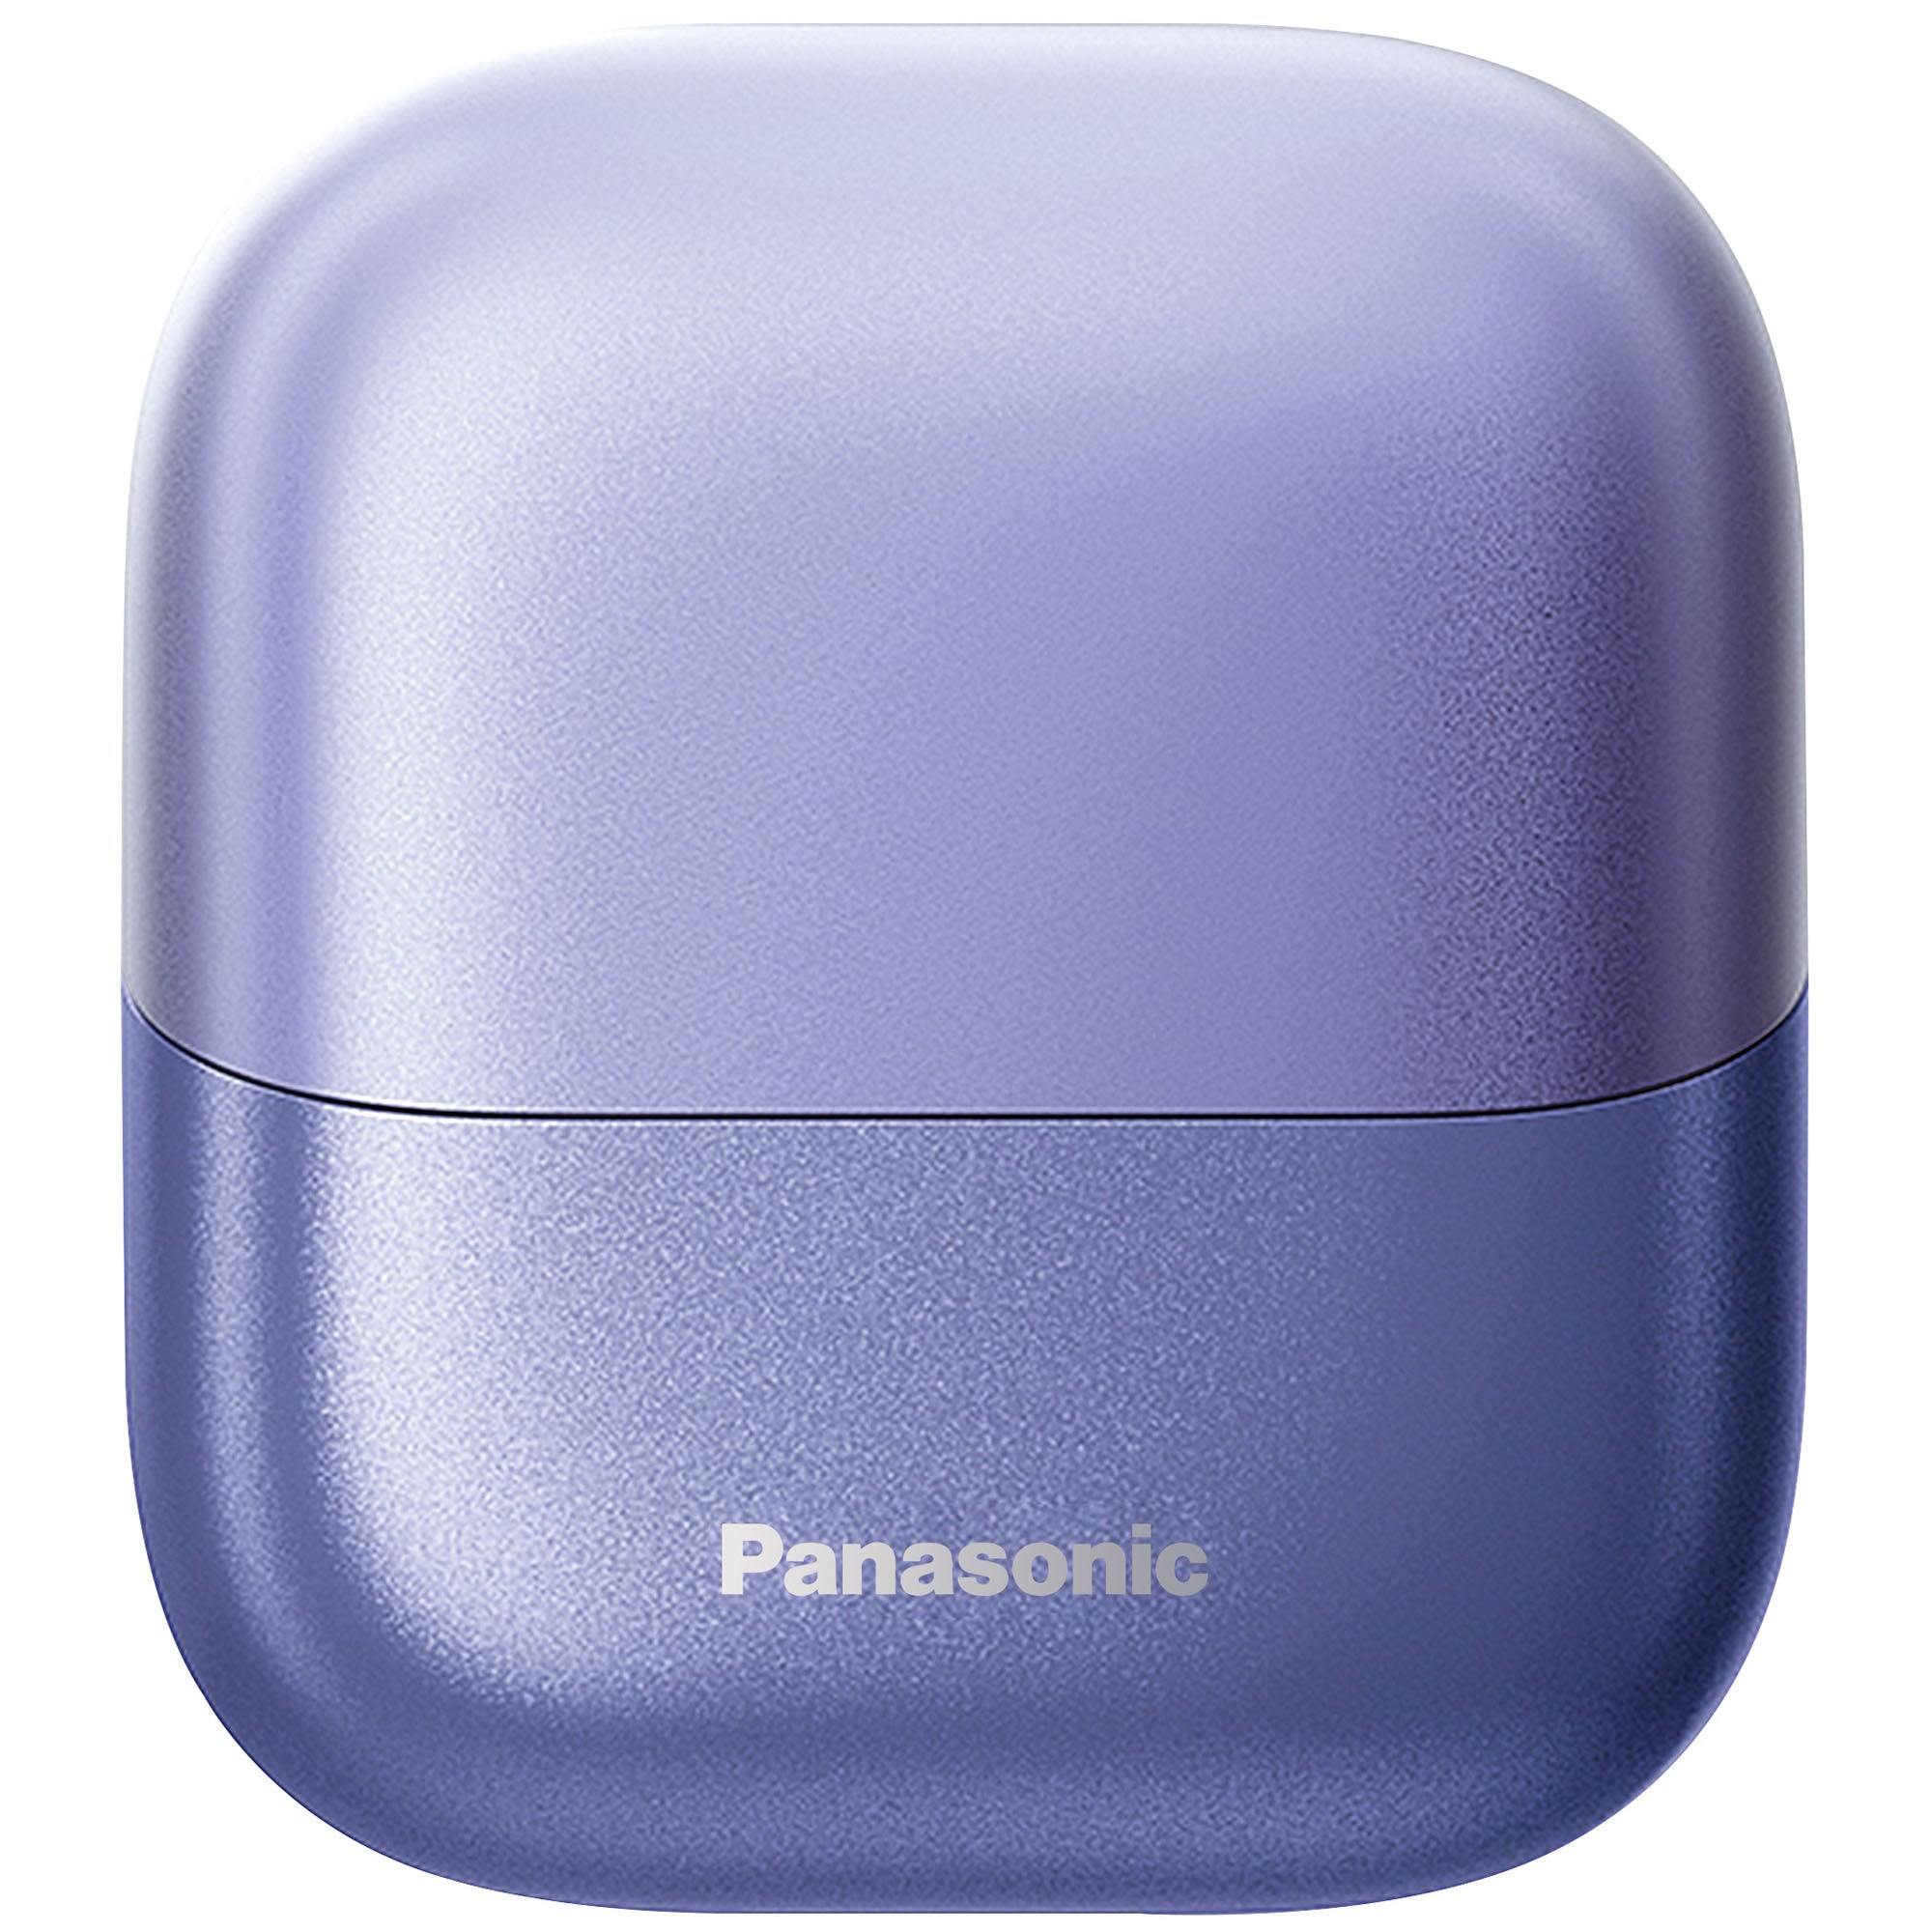 Panasonic "Swipe Right" Shaver for Men and Women